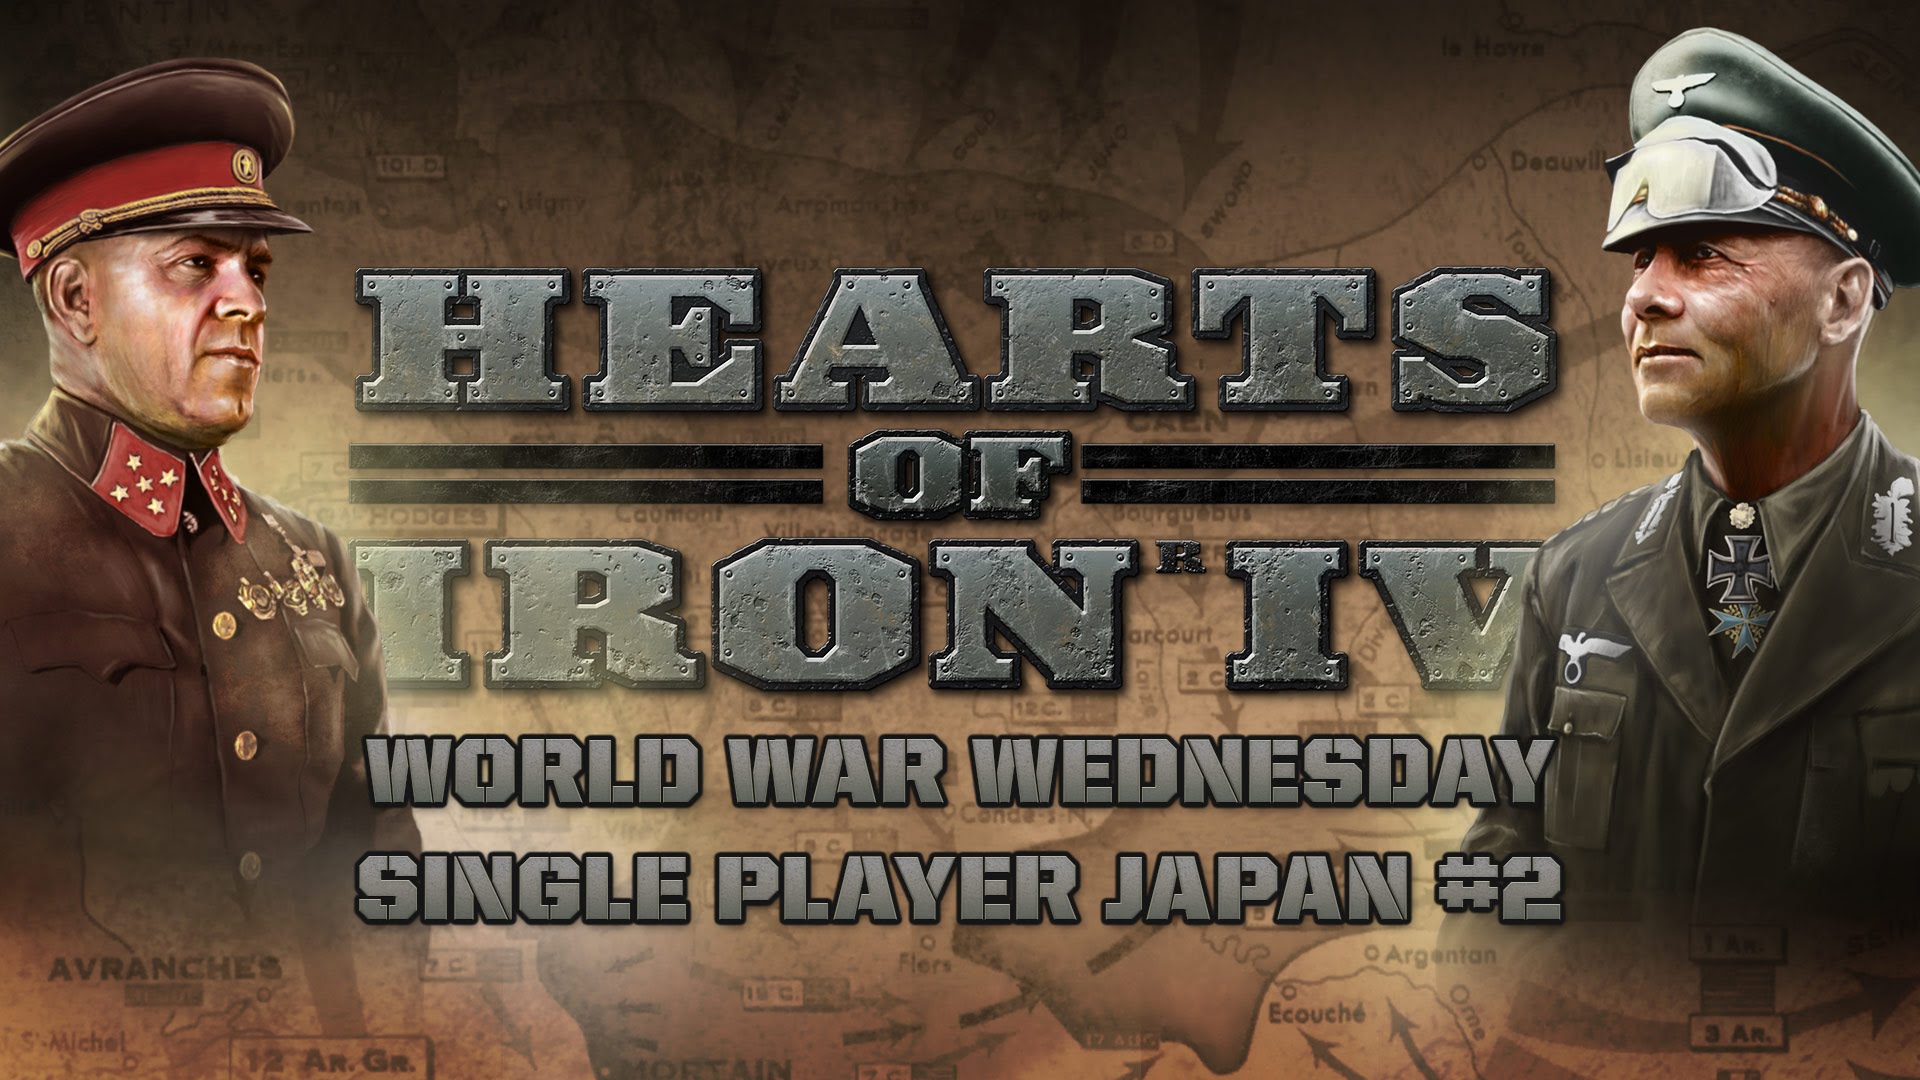 Hearts of Iron IV – “World War Wednesday” – Single Player Japan #2